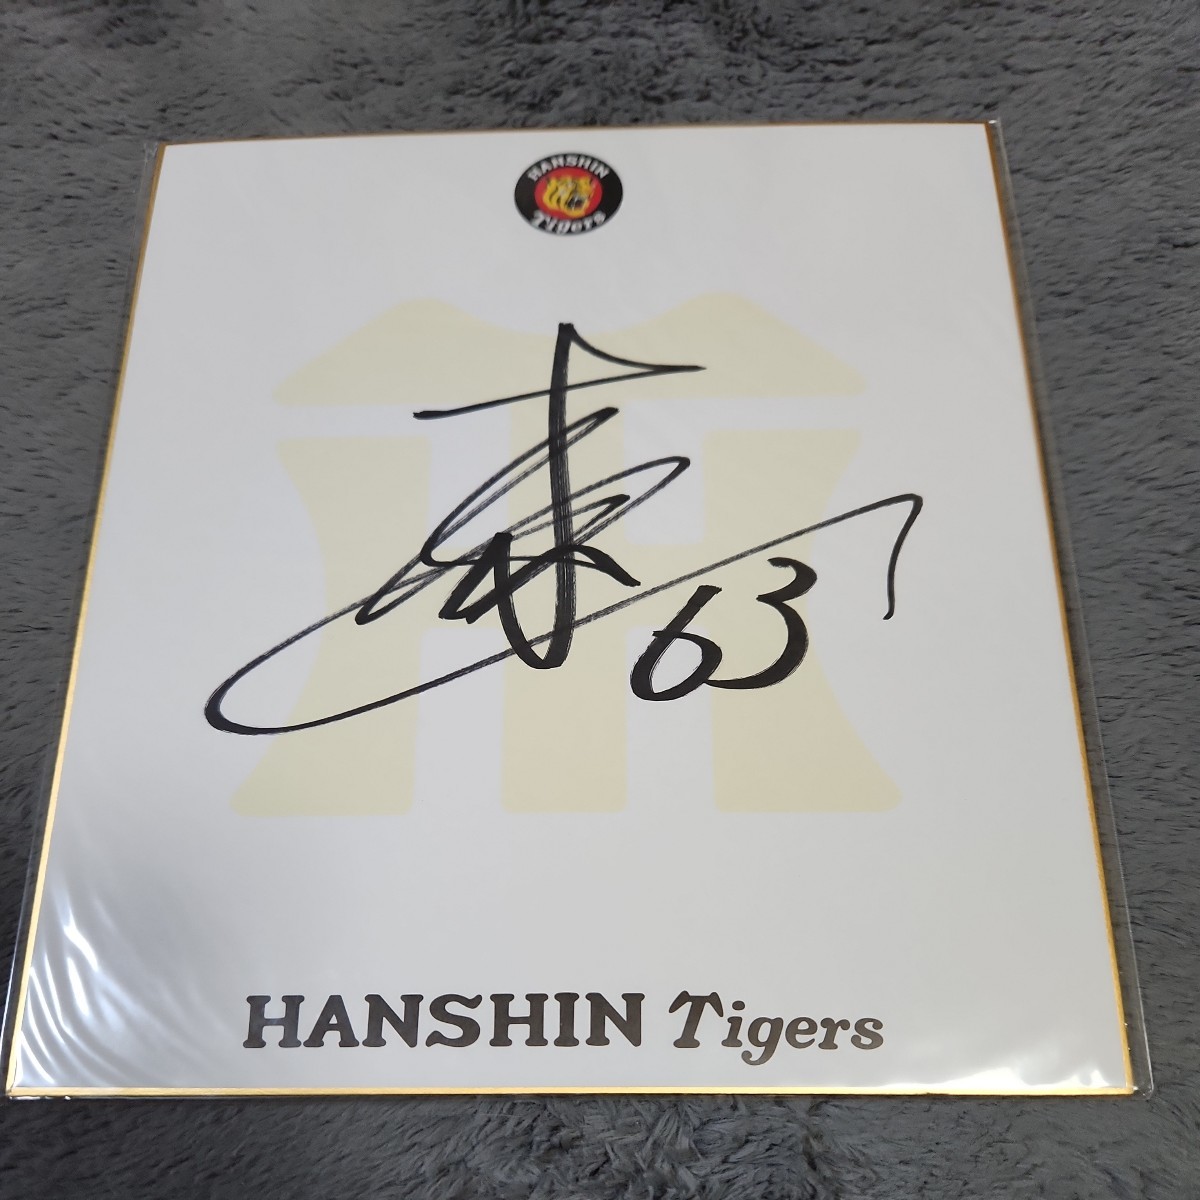 Хансин Тайгерс Ютаро Итаяма с автографом команды, бейсбол, Сувенир, Сопутствующие товары, знак